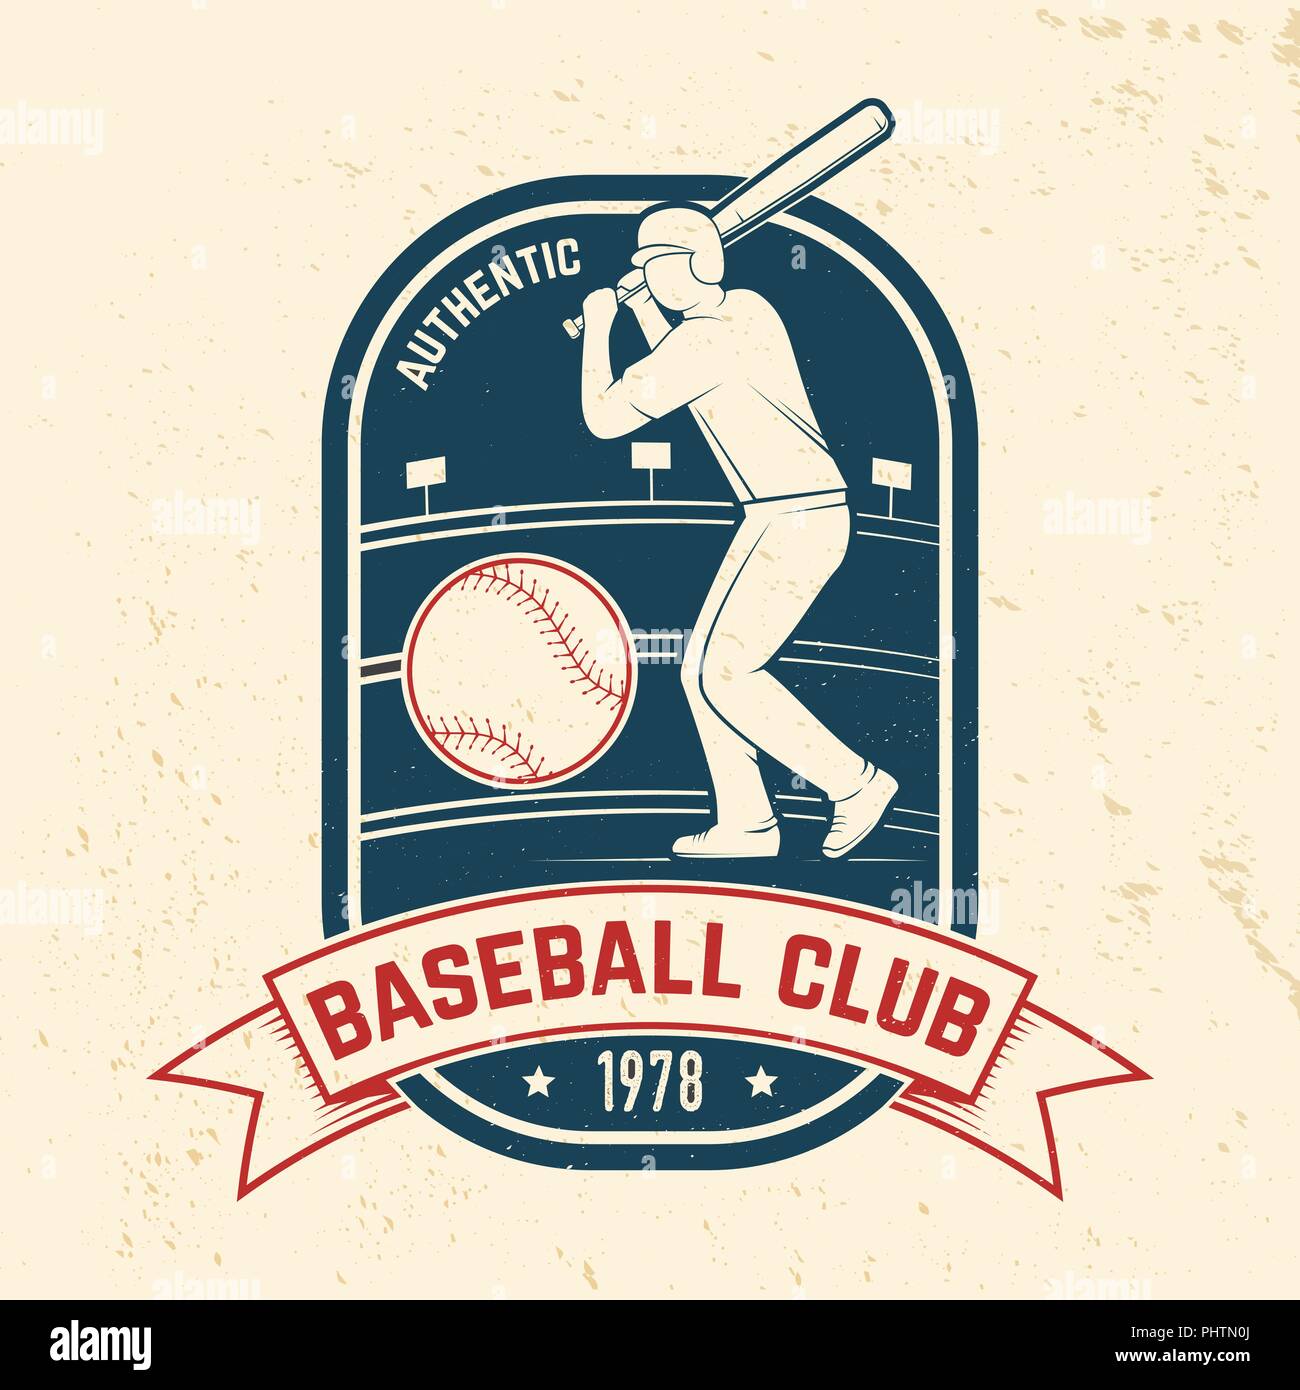 Baseball or softball club badge. Vector illustration. Concept for shirt or logo, print, stamp or tee. Vintage typography design with baseball batter and ball for baseball silhouette. Stock Vector